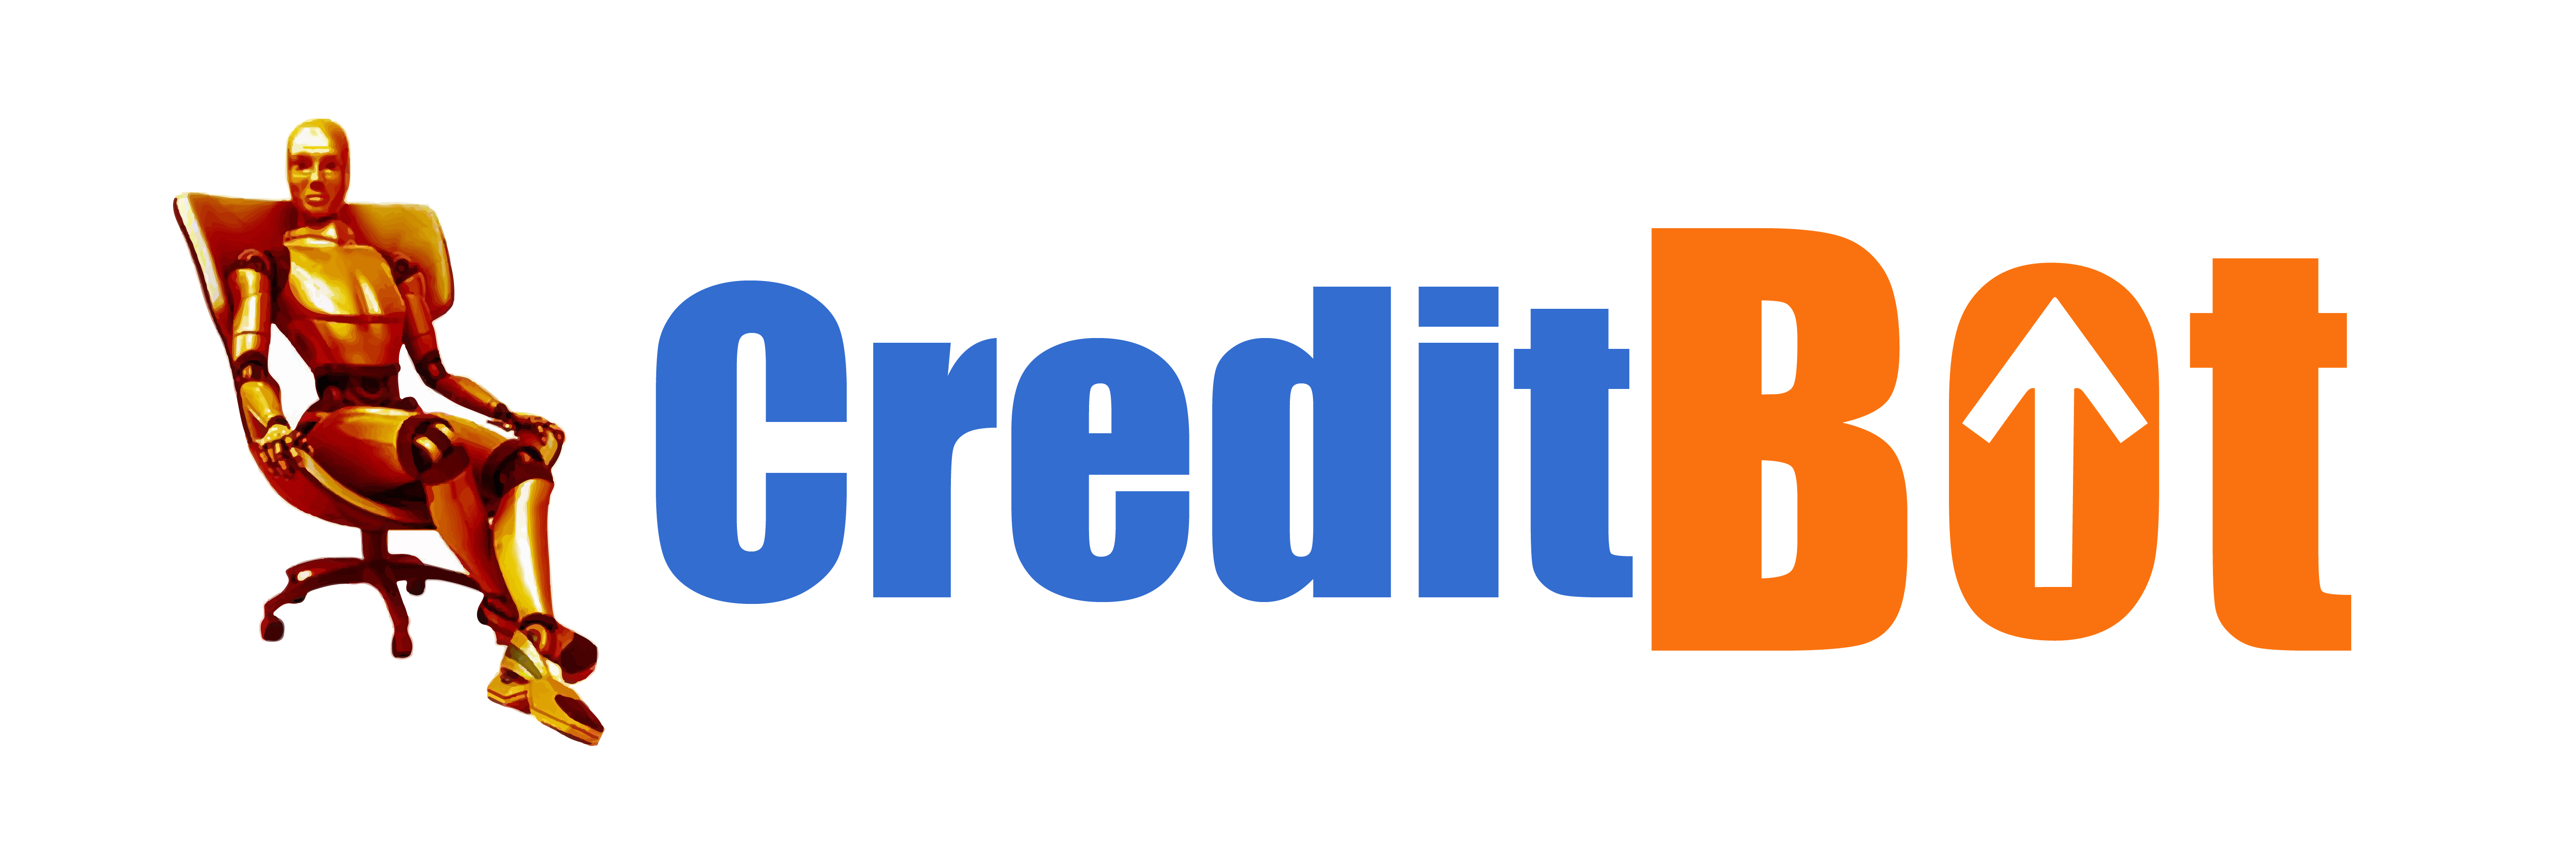 CreditBot Monitoring